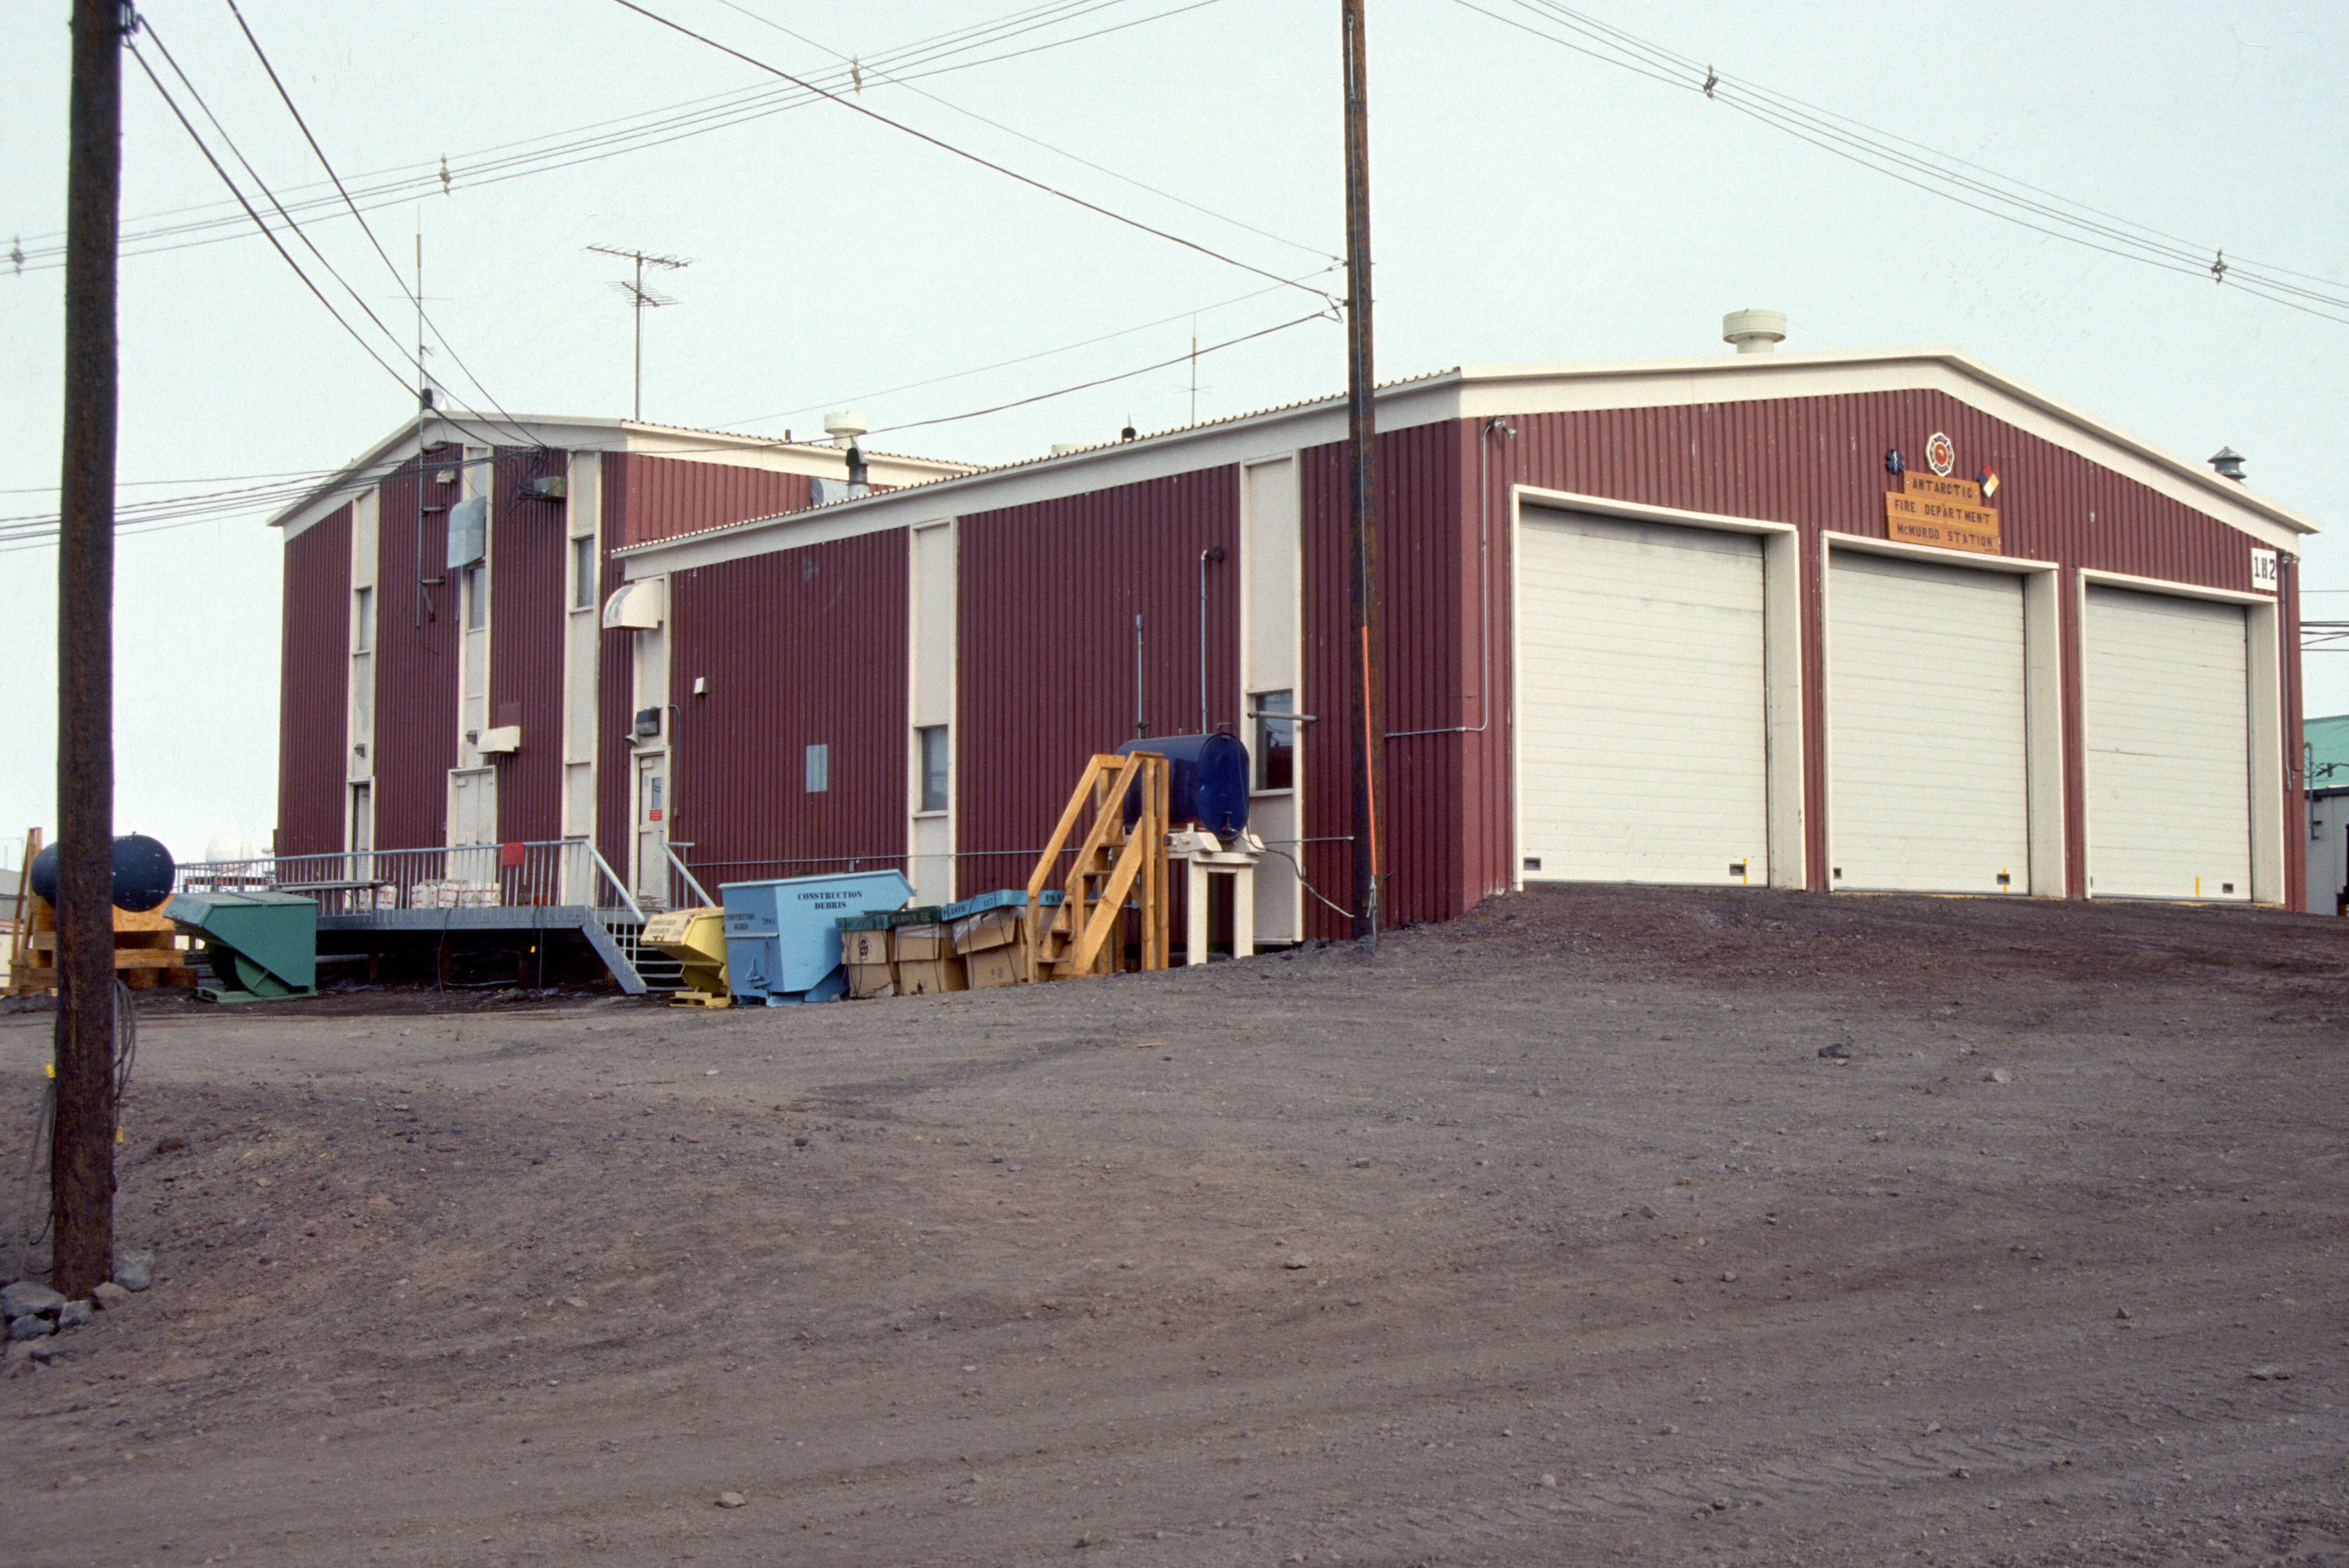 A three garage fire station.